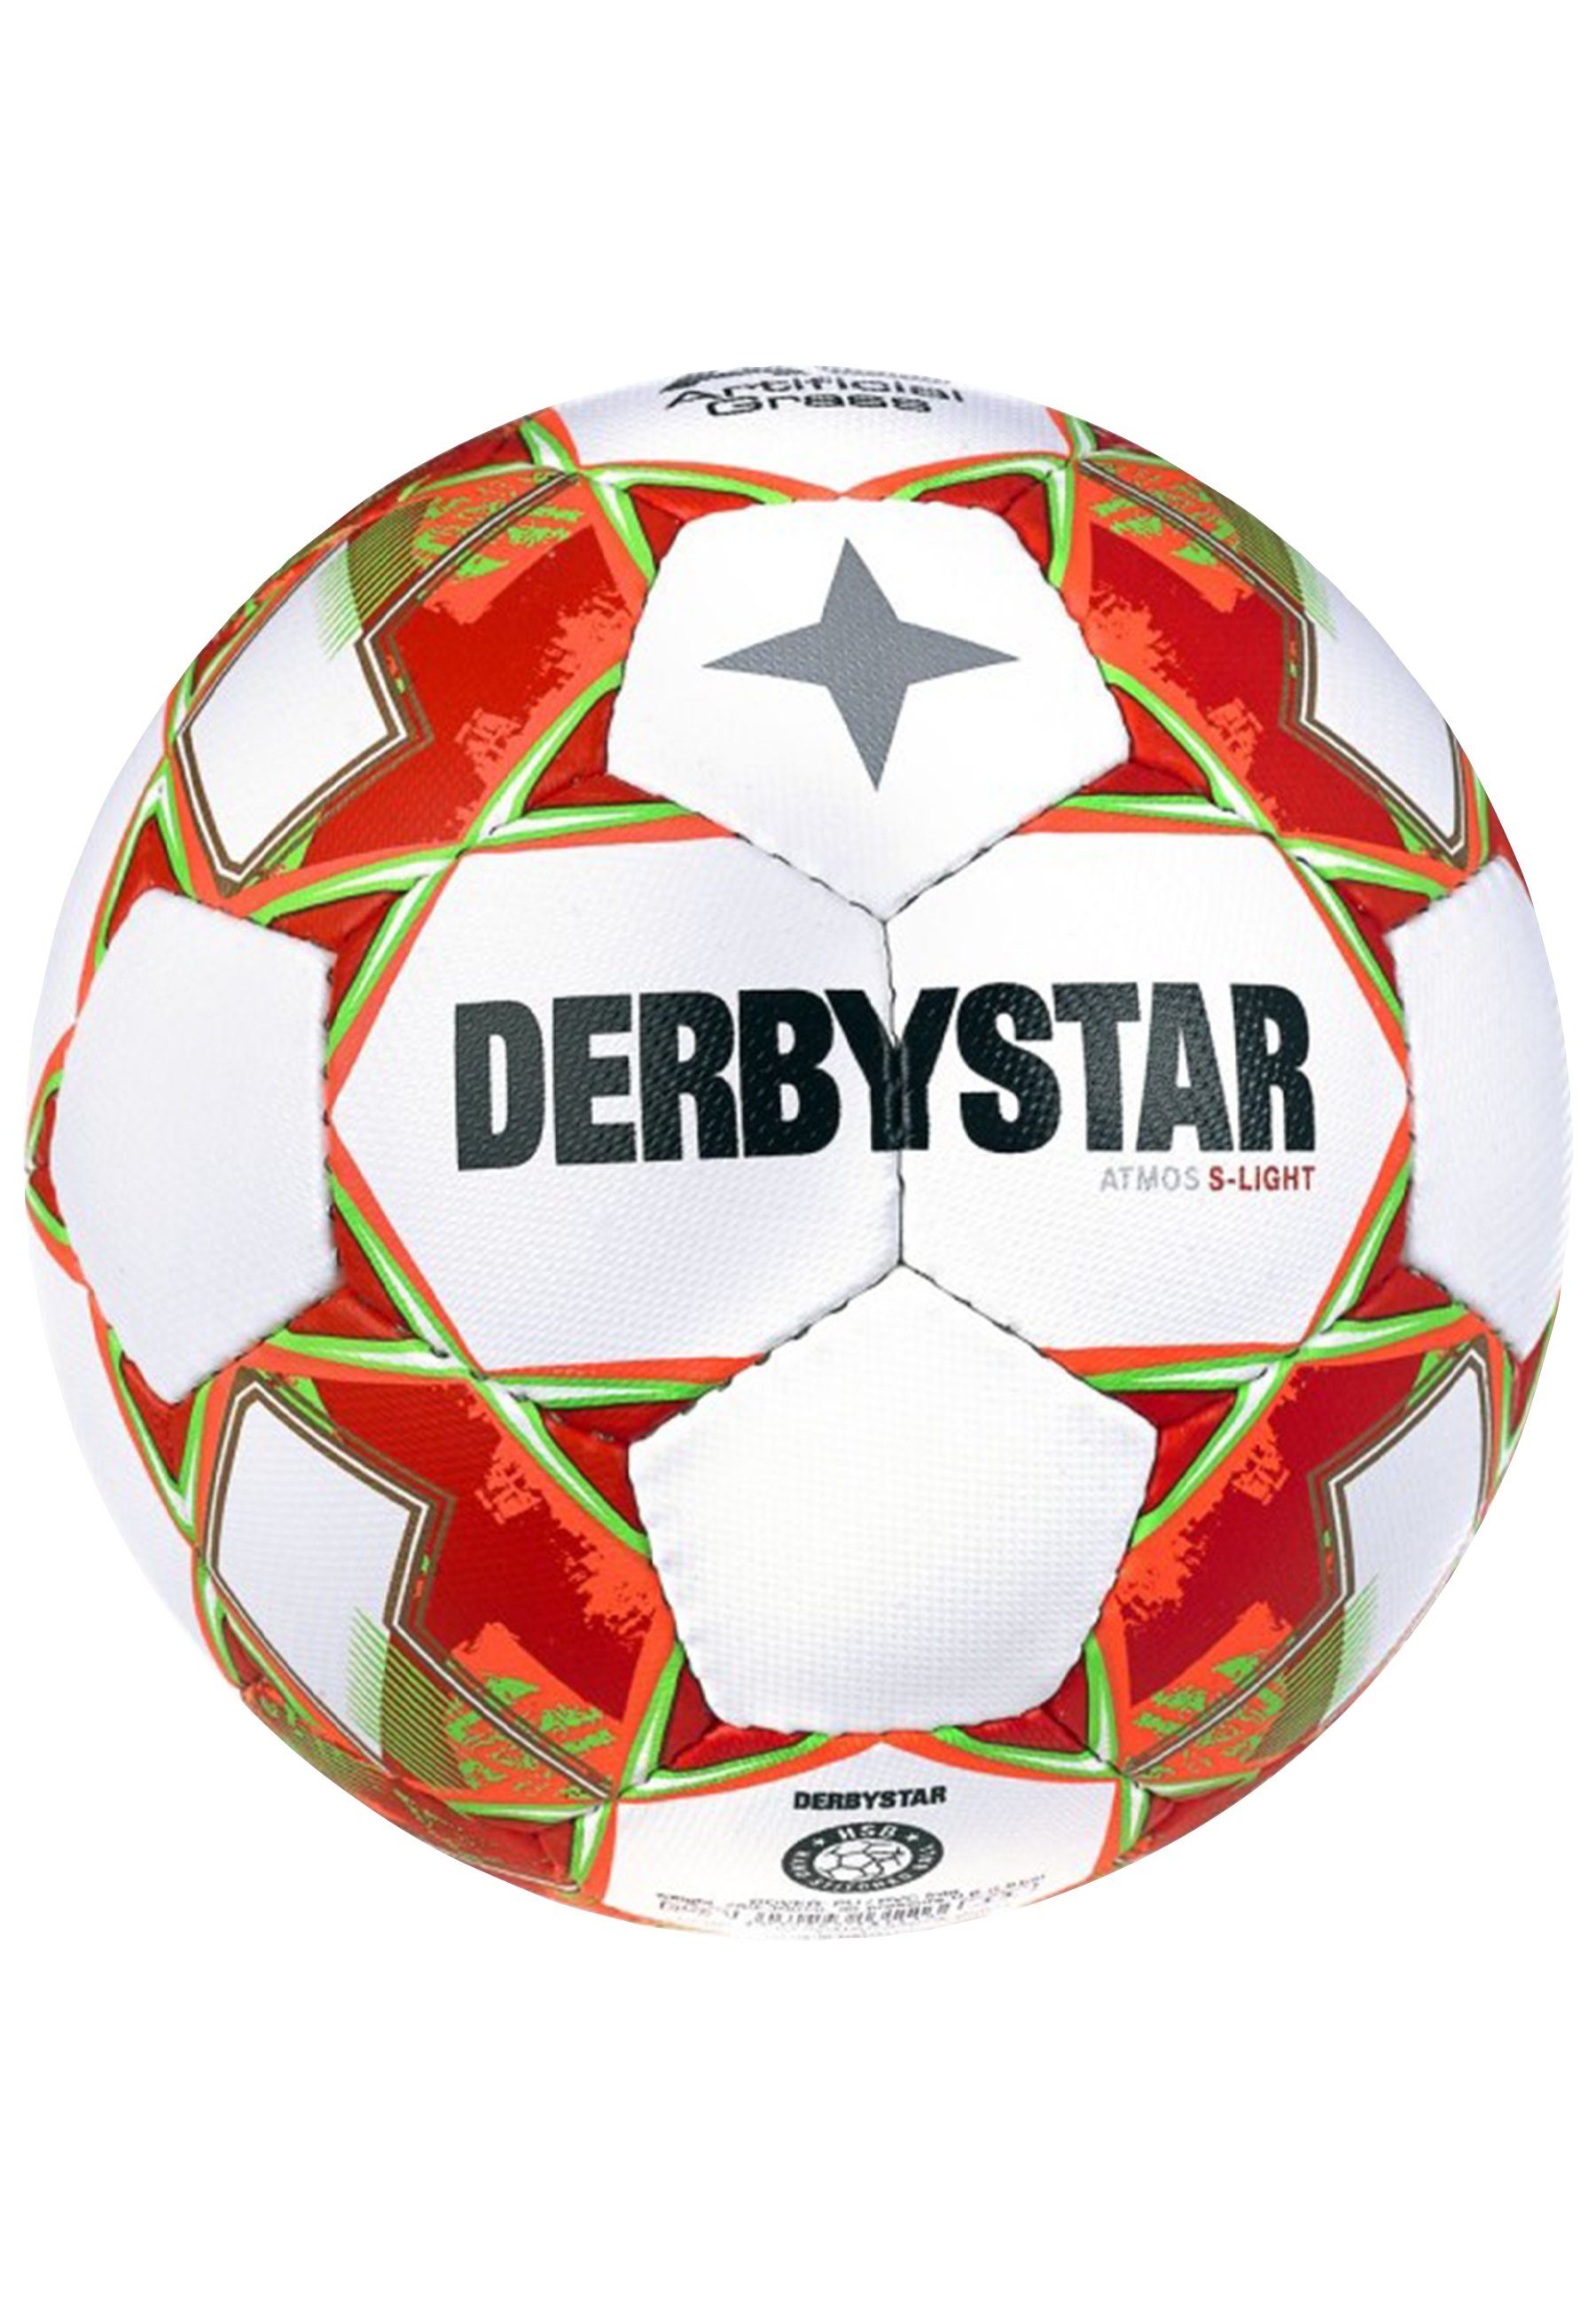 Fußball Größe Derbystar S-Light Atmos AG 5